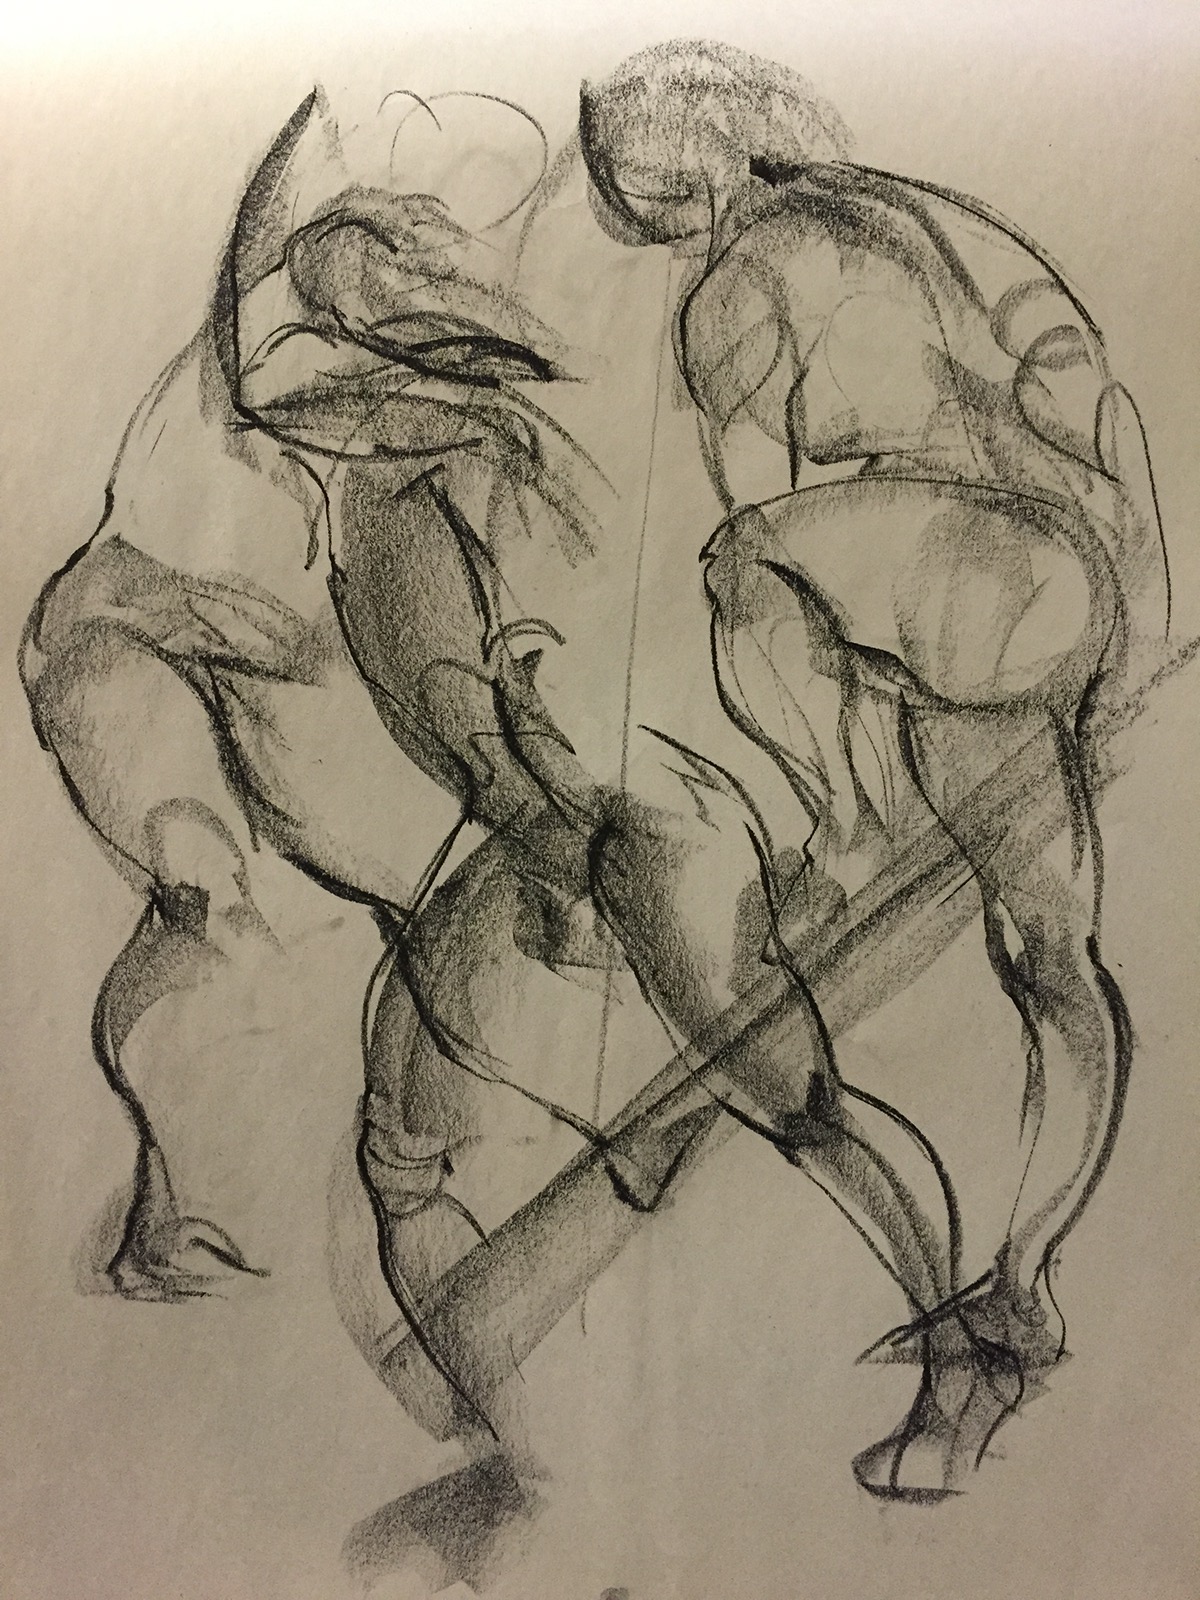 croquis figure drawings studies human forms